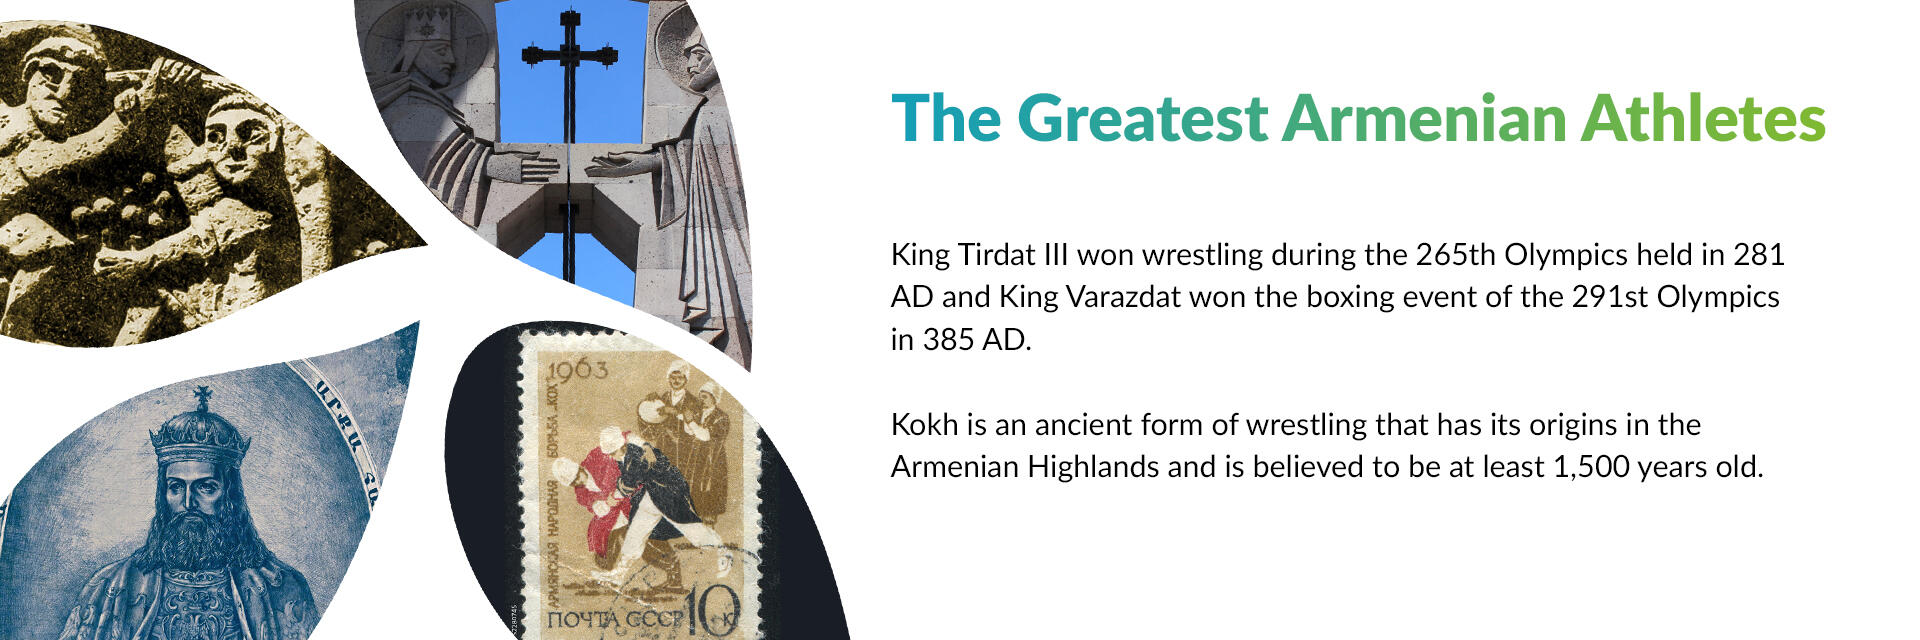 Armat_Greatest Armenian Athletes